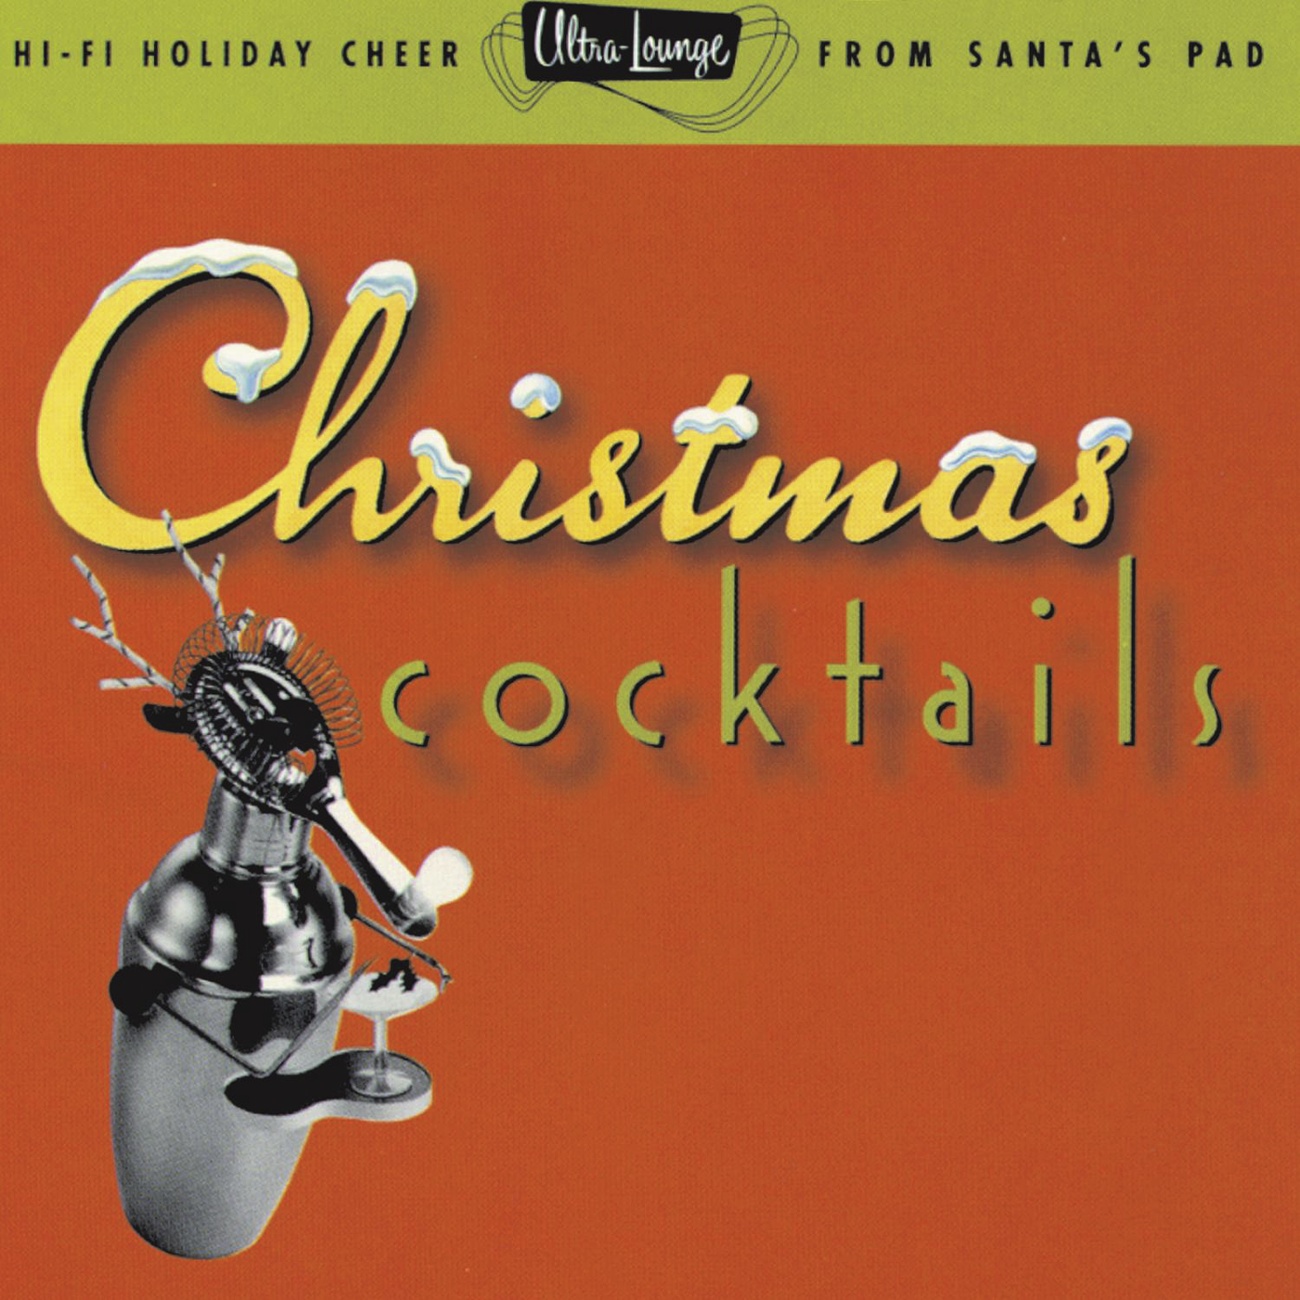 I Saw Mommy Kissing Santa Claus/Jingle Bells Bossa Nova (Medley) (1996 - Remaster)